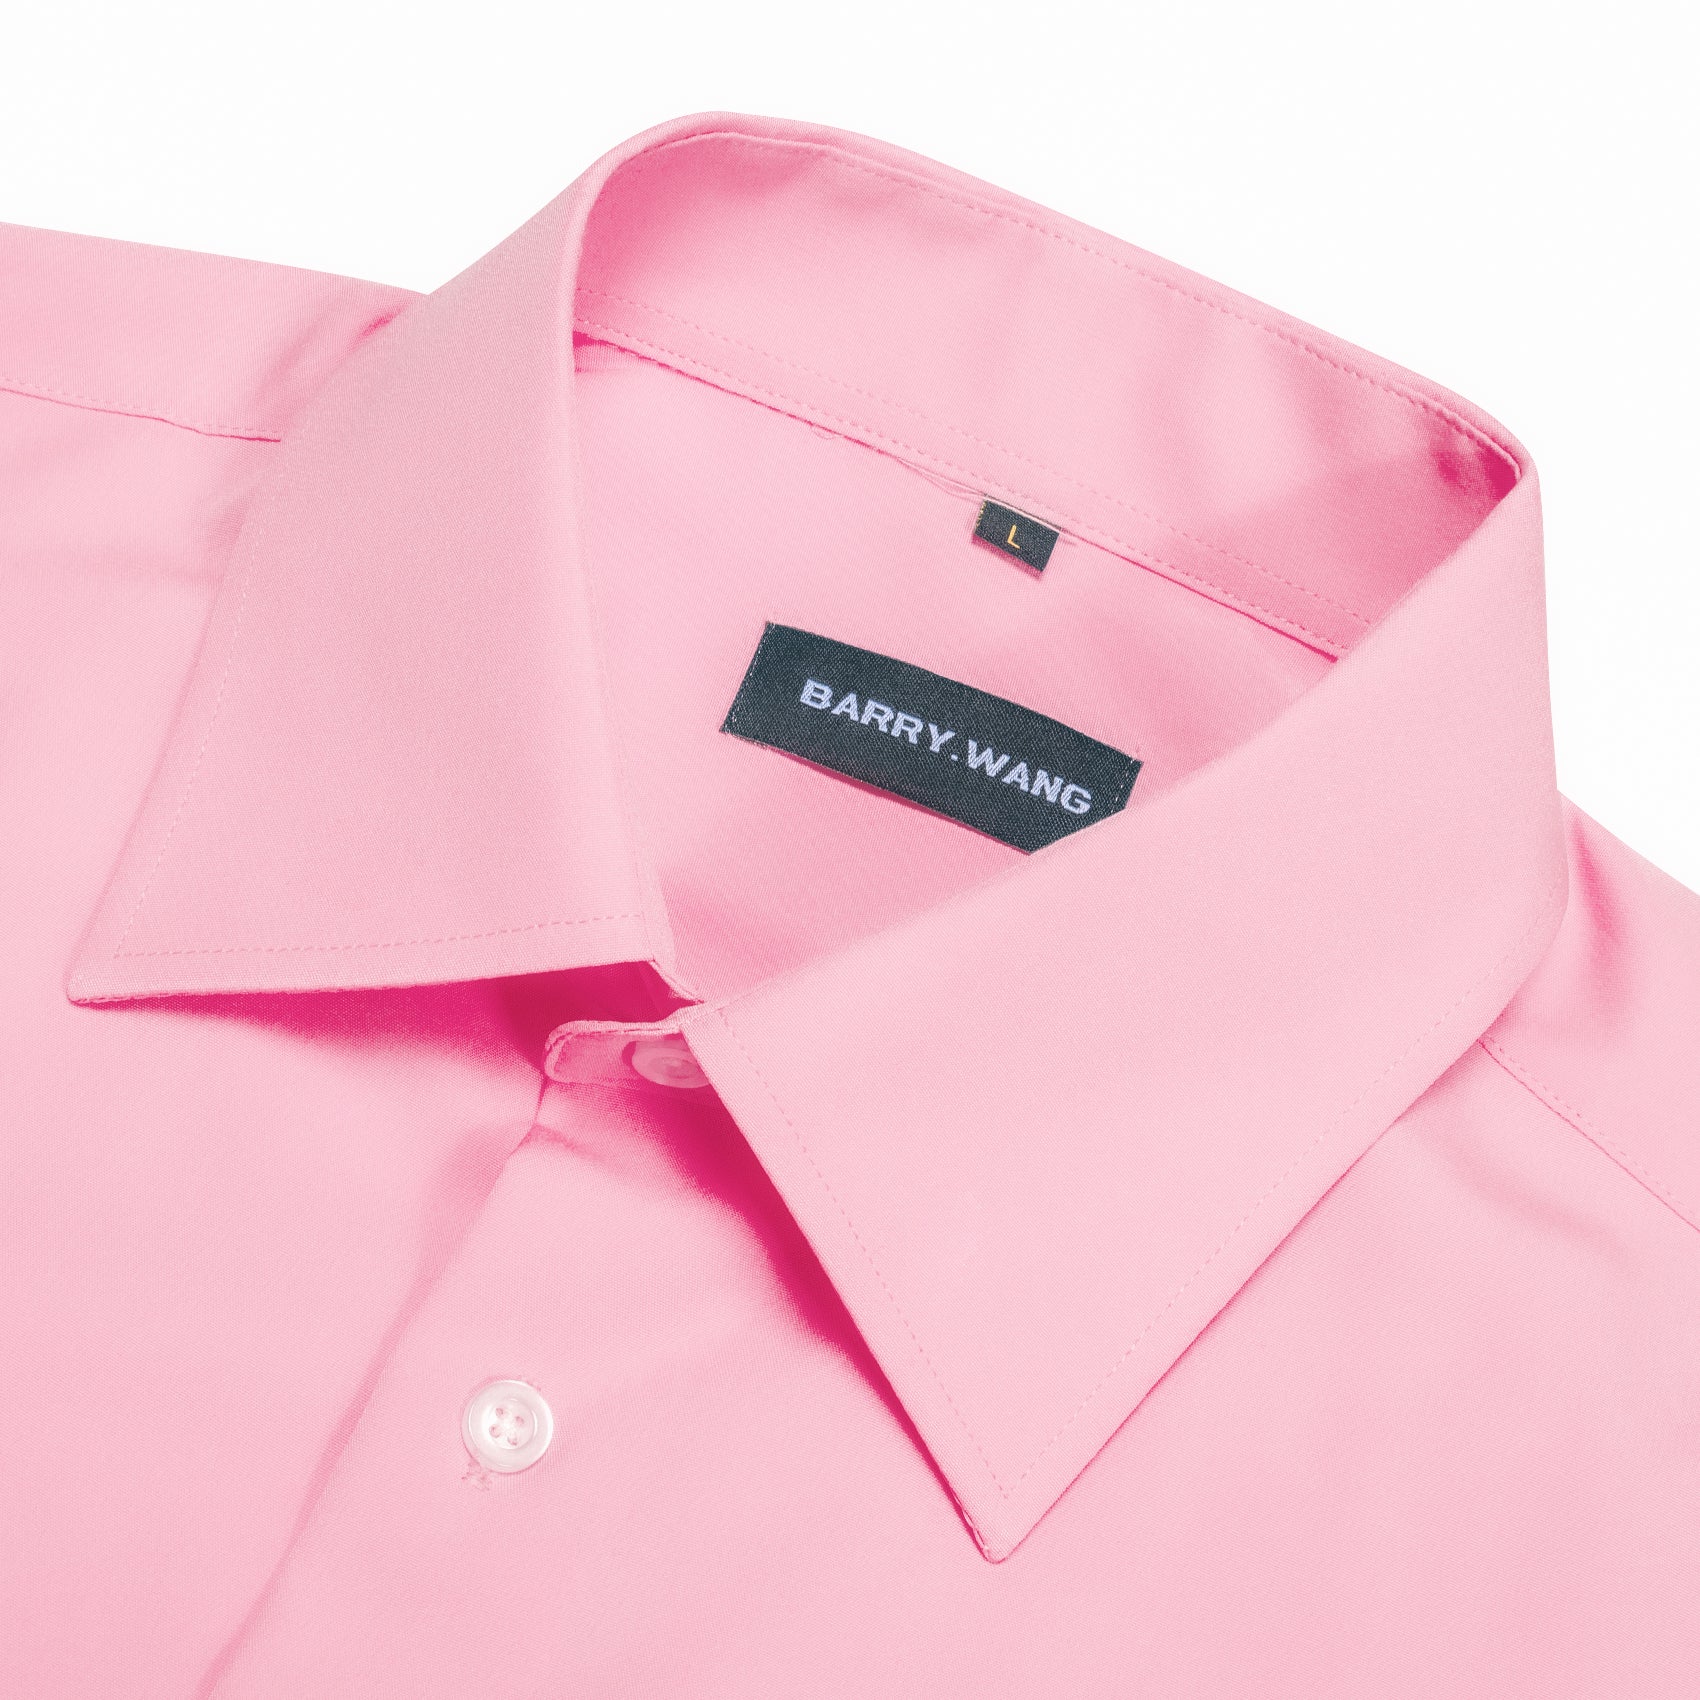 Barry.wang Pink Solid Short Sleeves Shirt